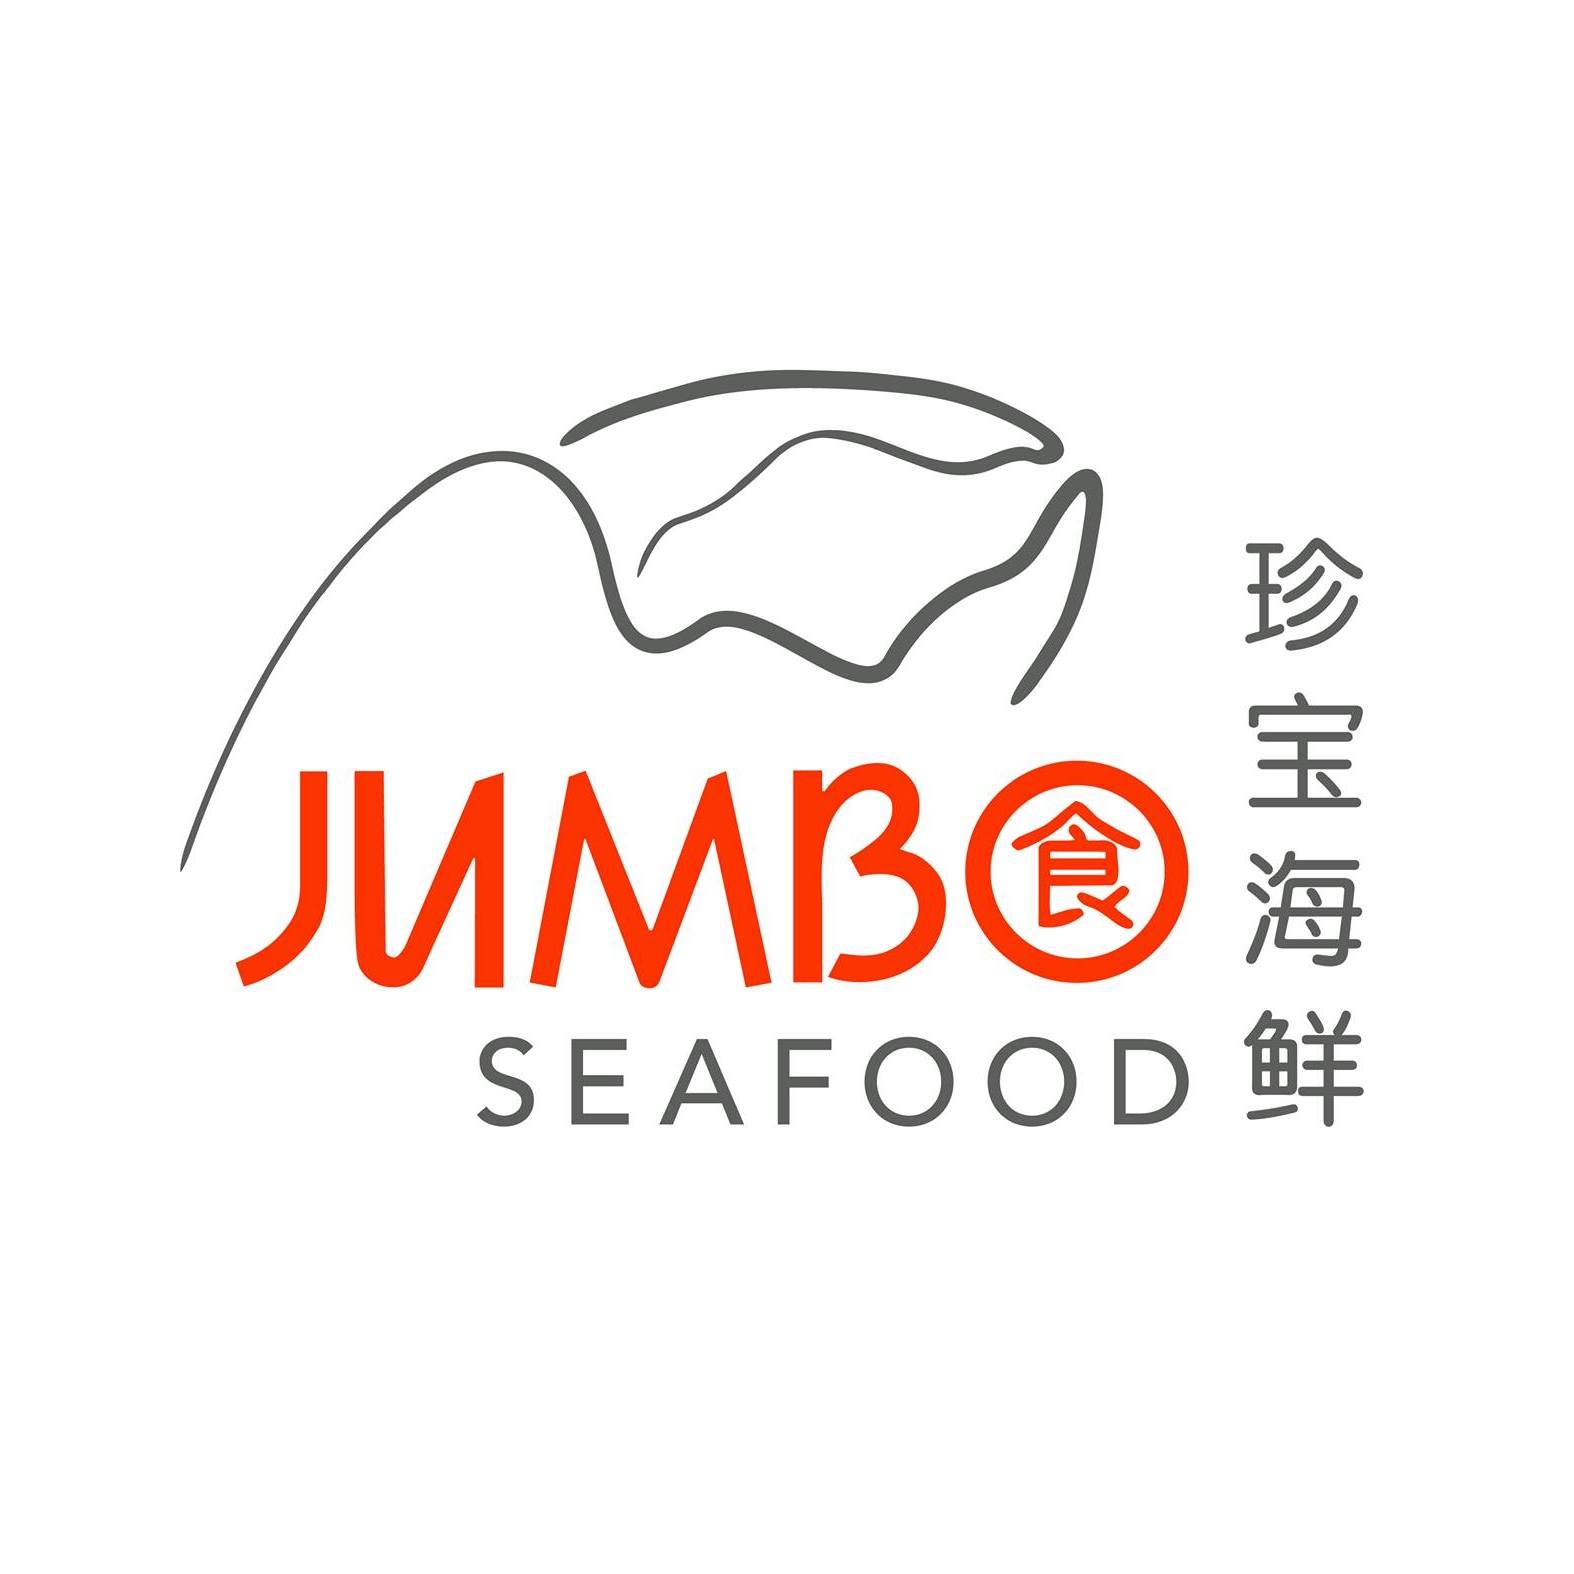 JUMBO Seafood - Logo